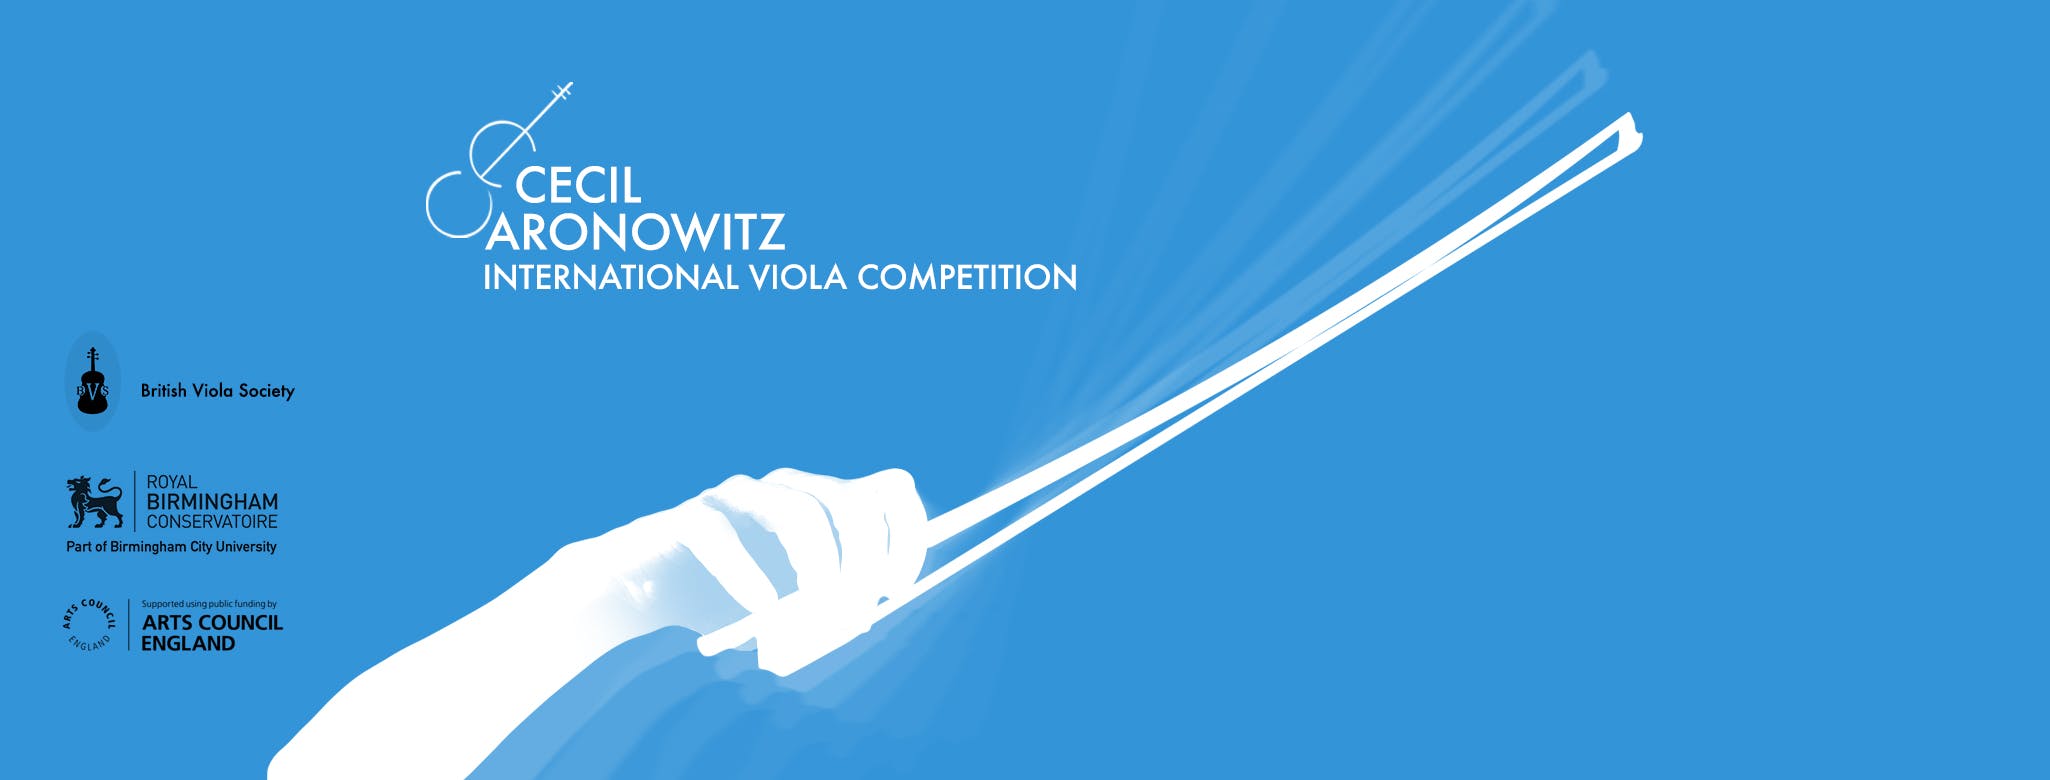 Cecil Aronowitz international viola competition logo, with British Viola Society Logo and Royal Birmingham Conservatoire Logo and Arts Council England Logo